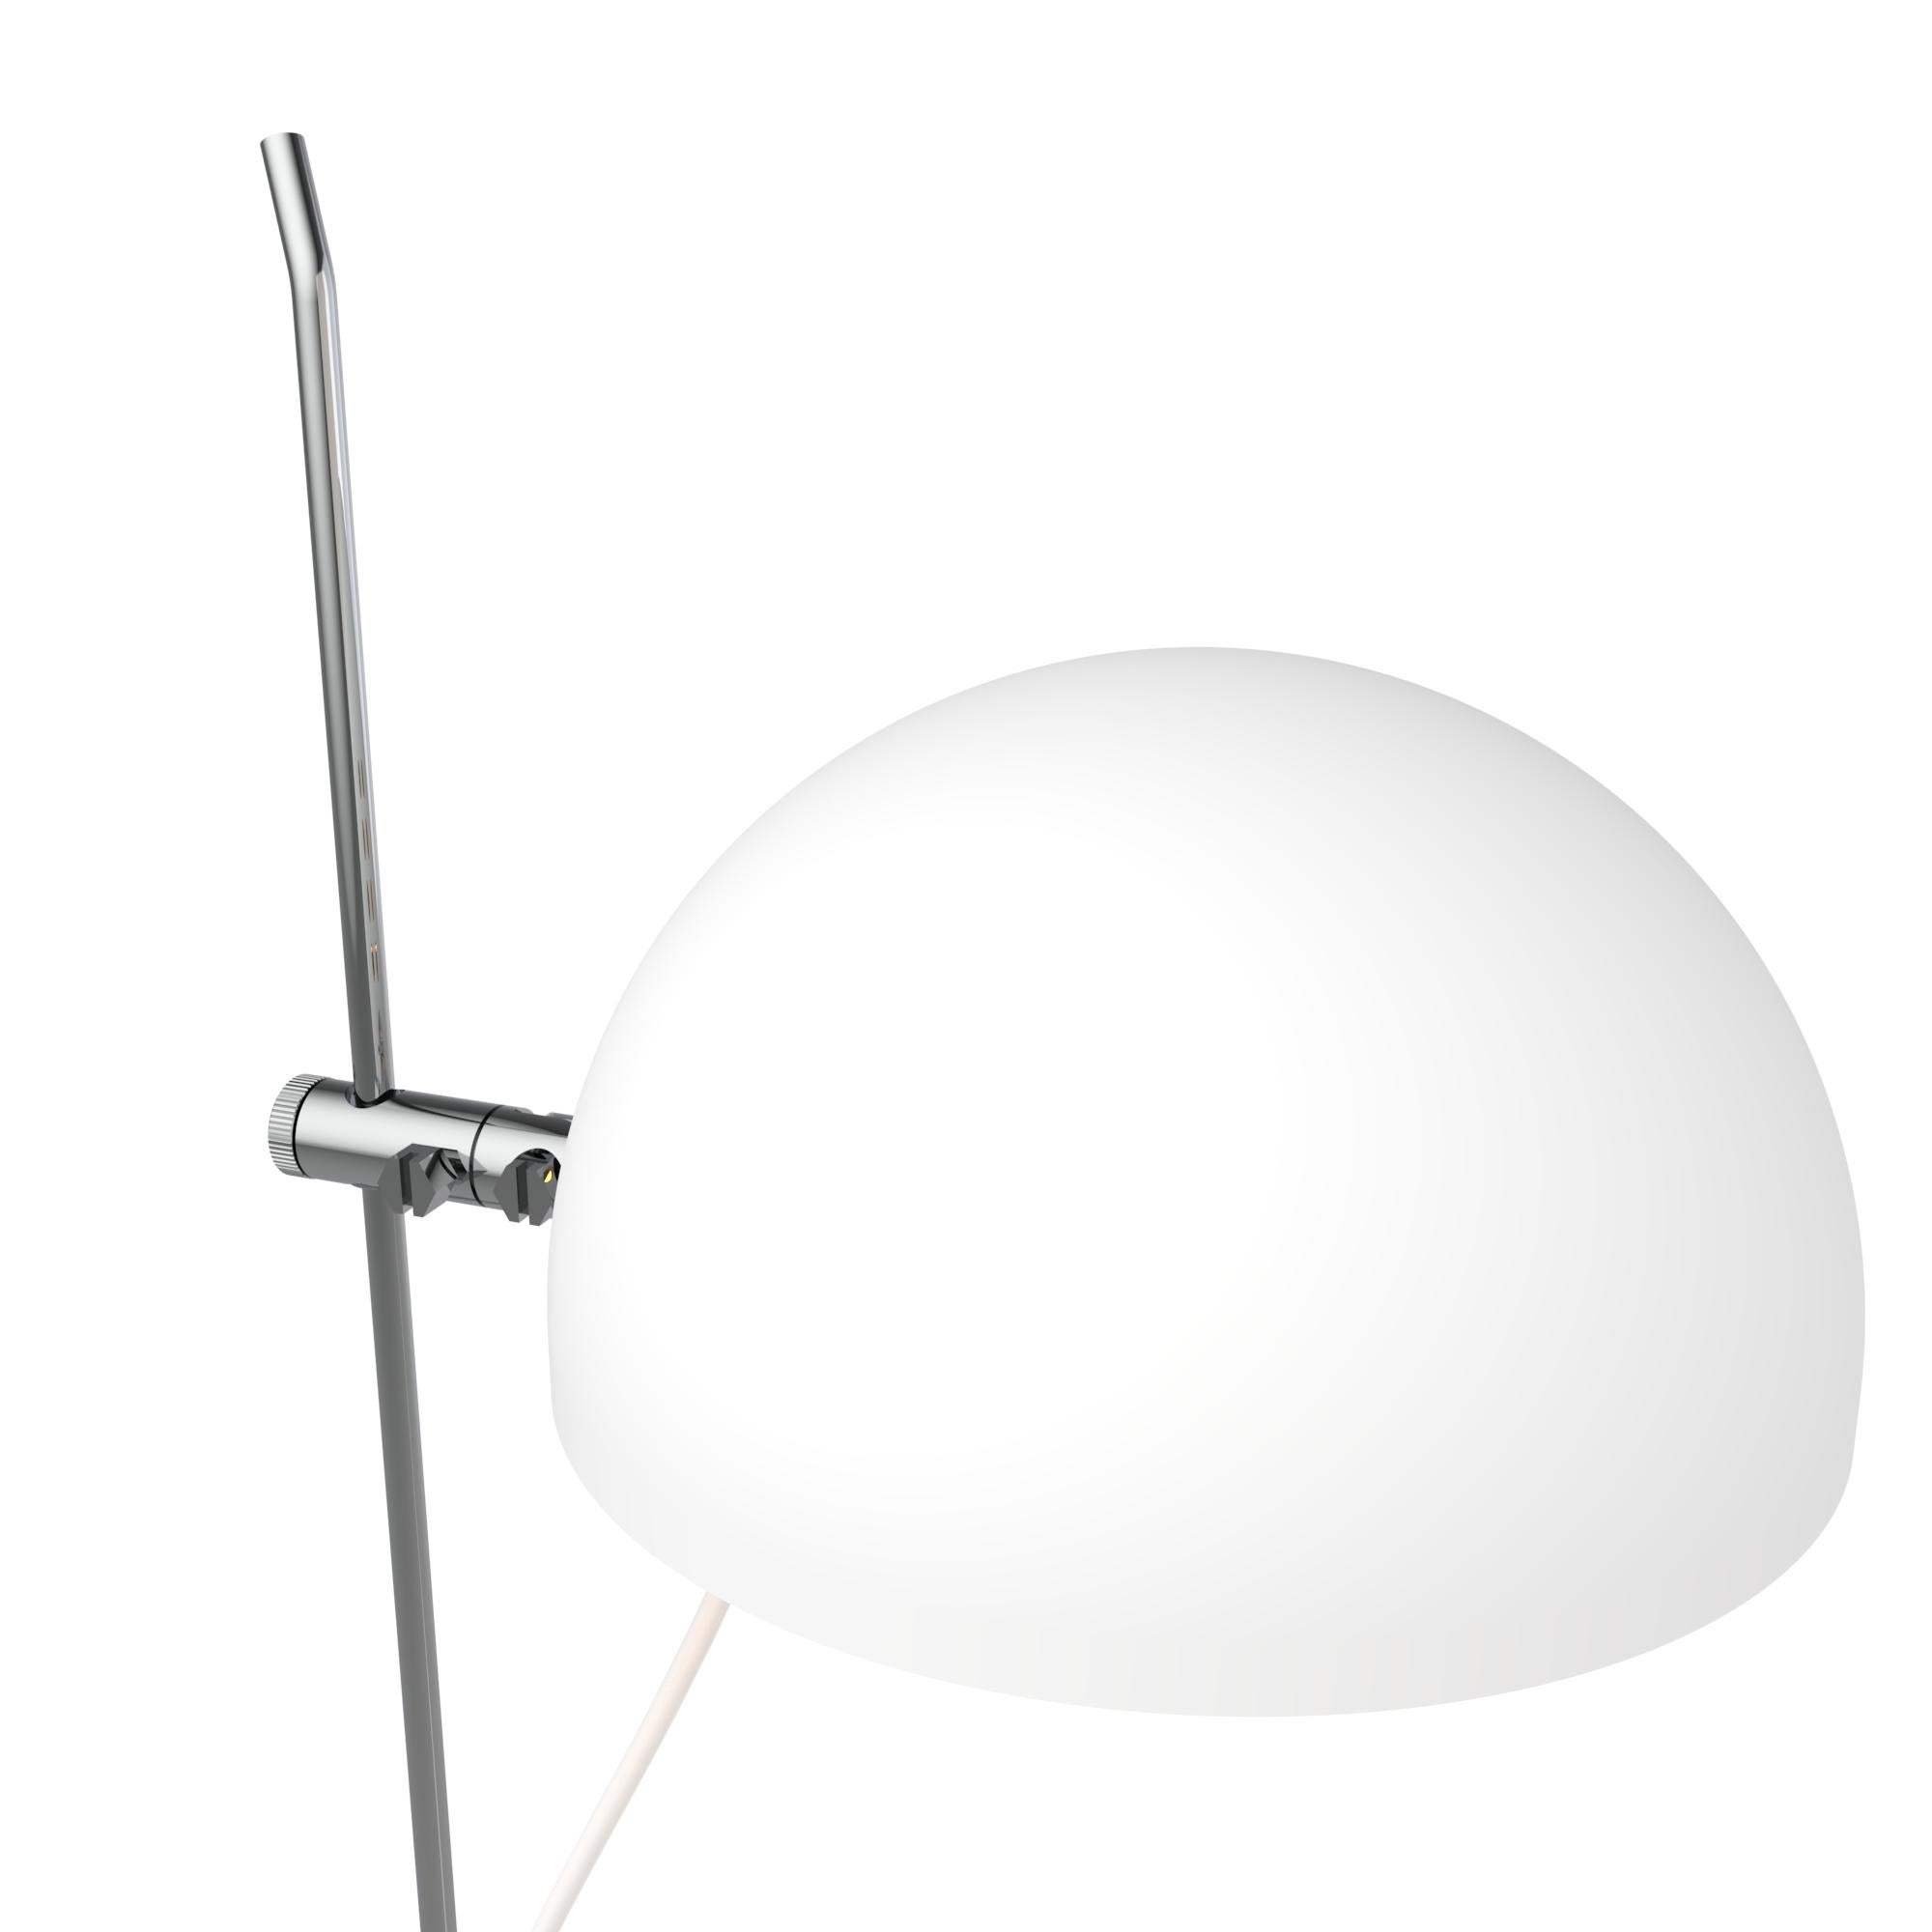 French Alain Richard 'A22f' Task Lamp in White for Disderot For Sale